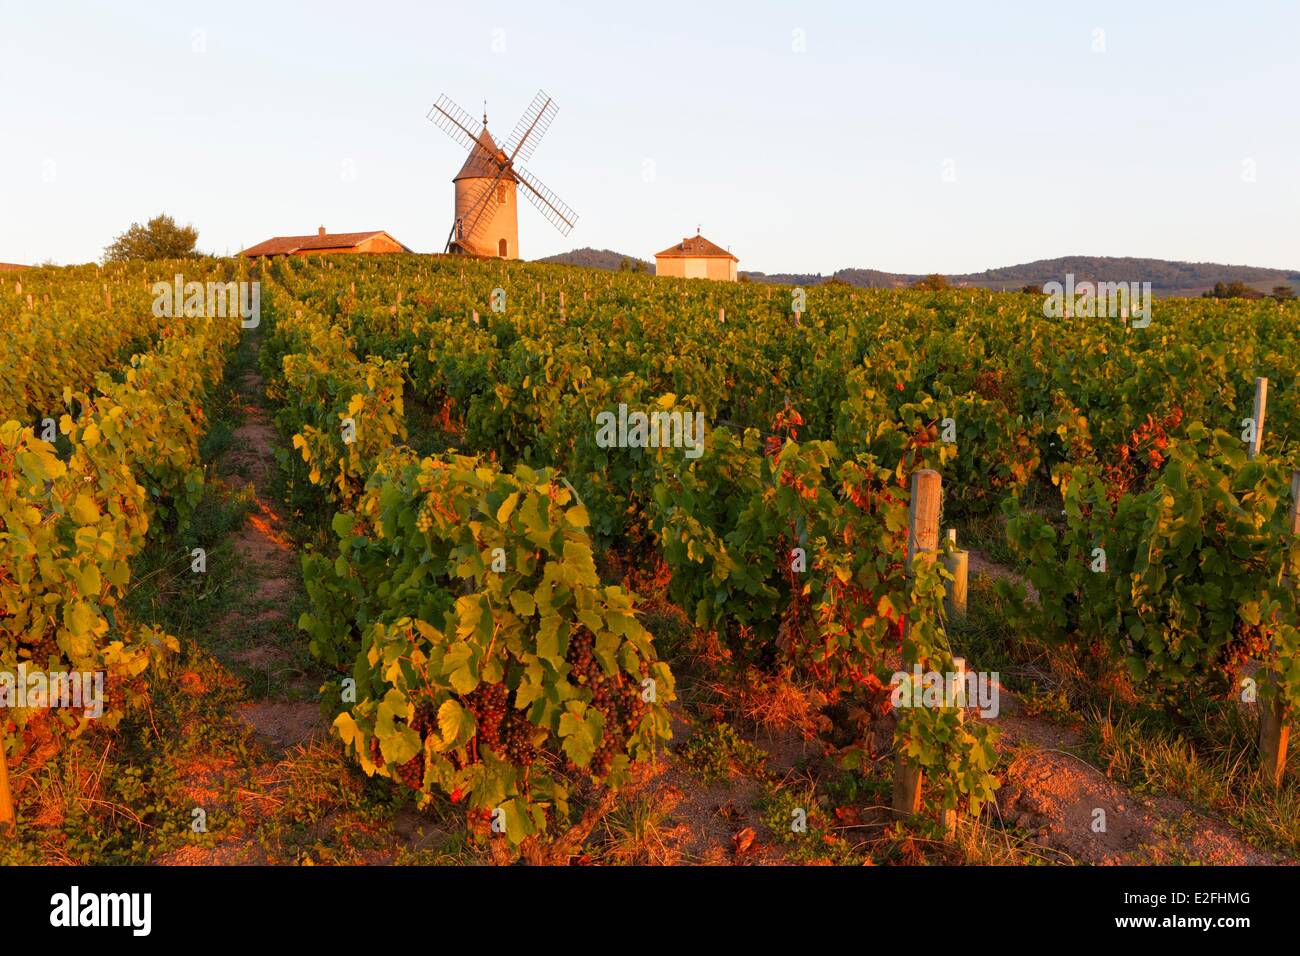 France, Saone et Loire, Moulin a Vent AOC Beaujolais vineyard, Exclusive Property of Chastel-SAUZET family, Romaneche Thorins Stock Photo